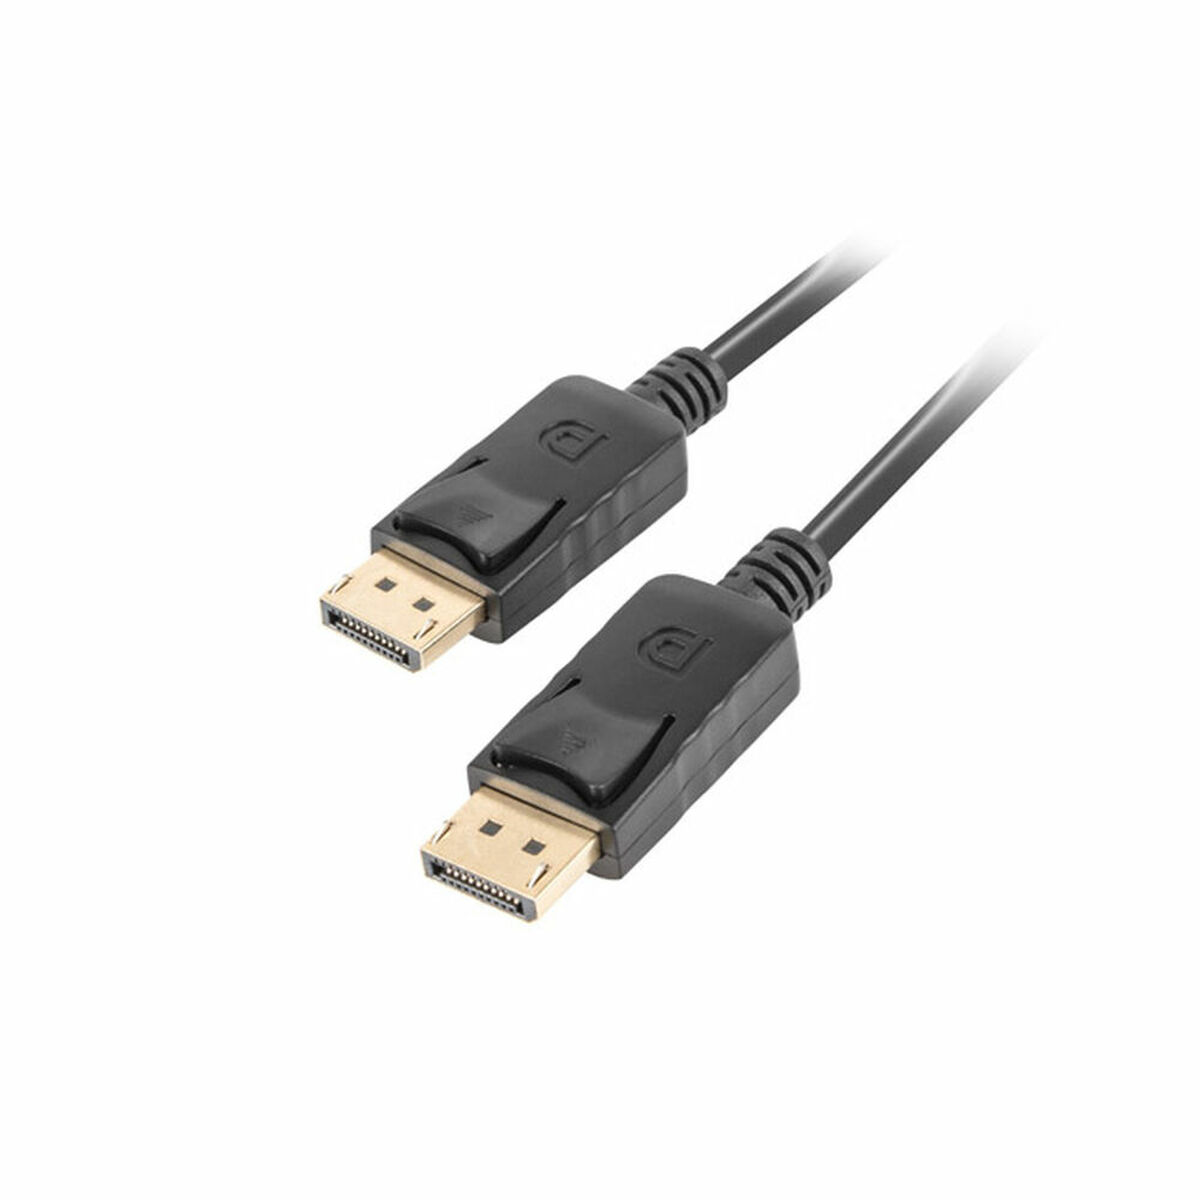 DisplayPort Cable Lanberg CA-DPDP-10CC-0030-BK 3 m Black